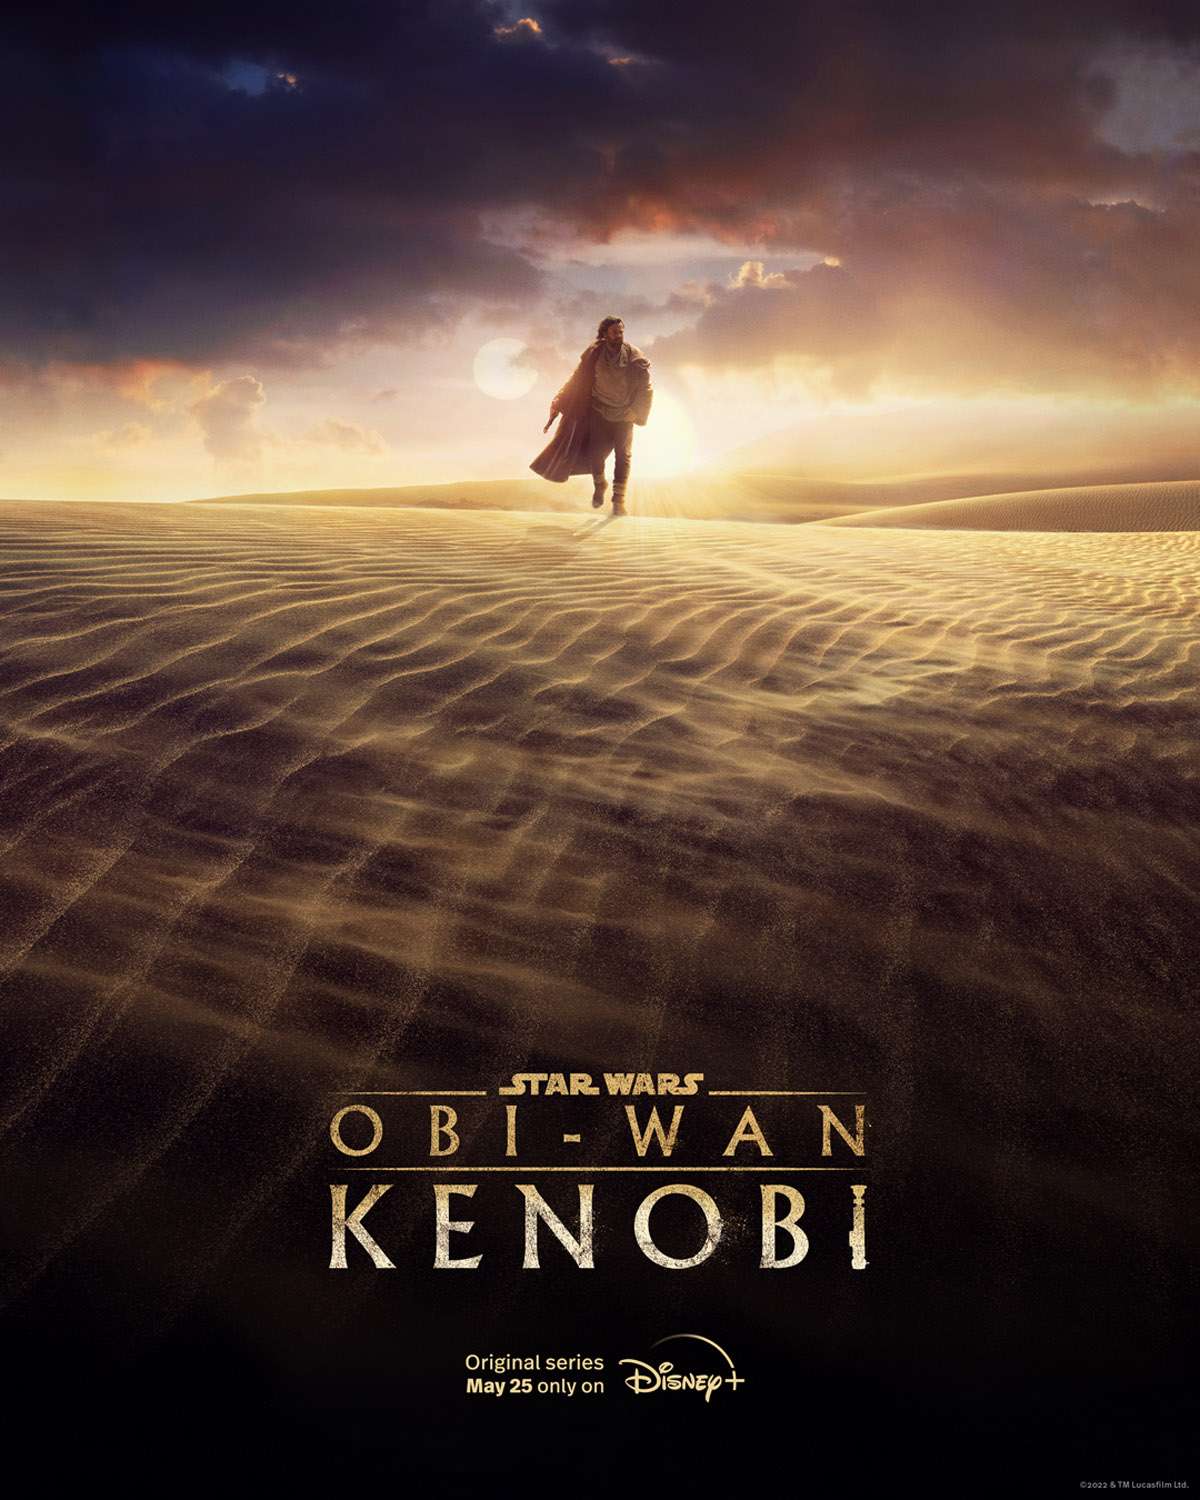 Star Wars: Obi-Wan Kenobi poster.